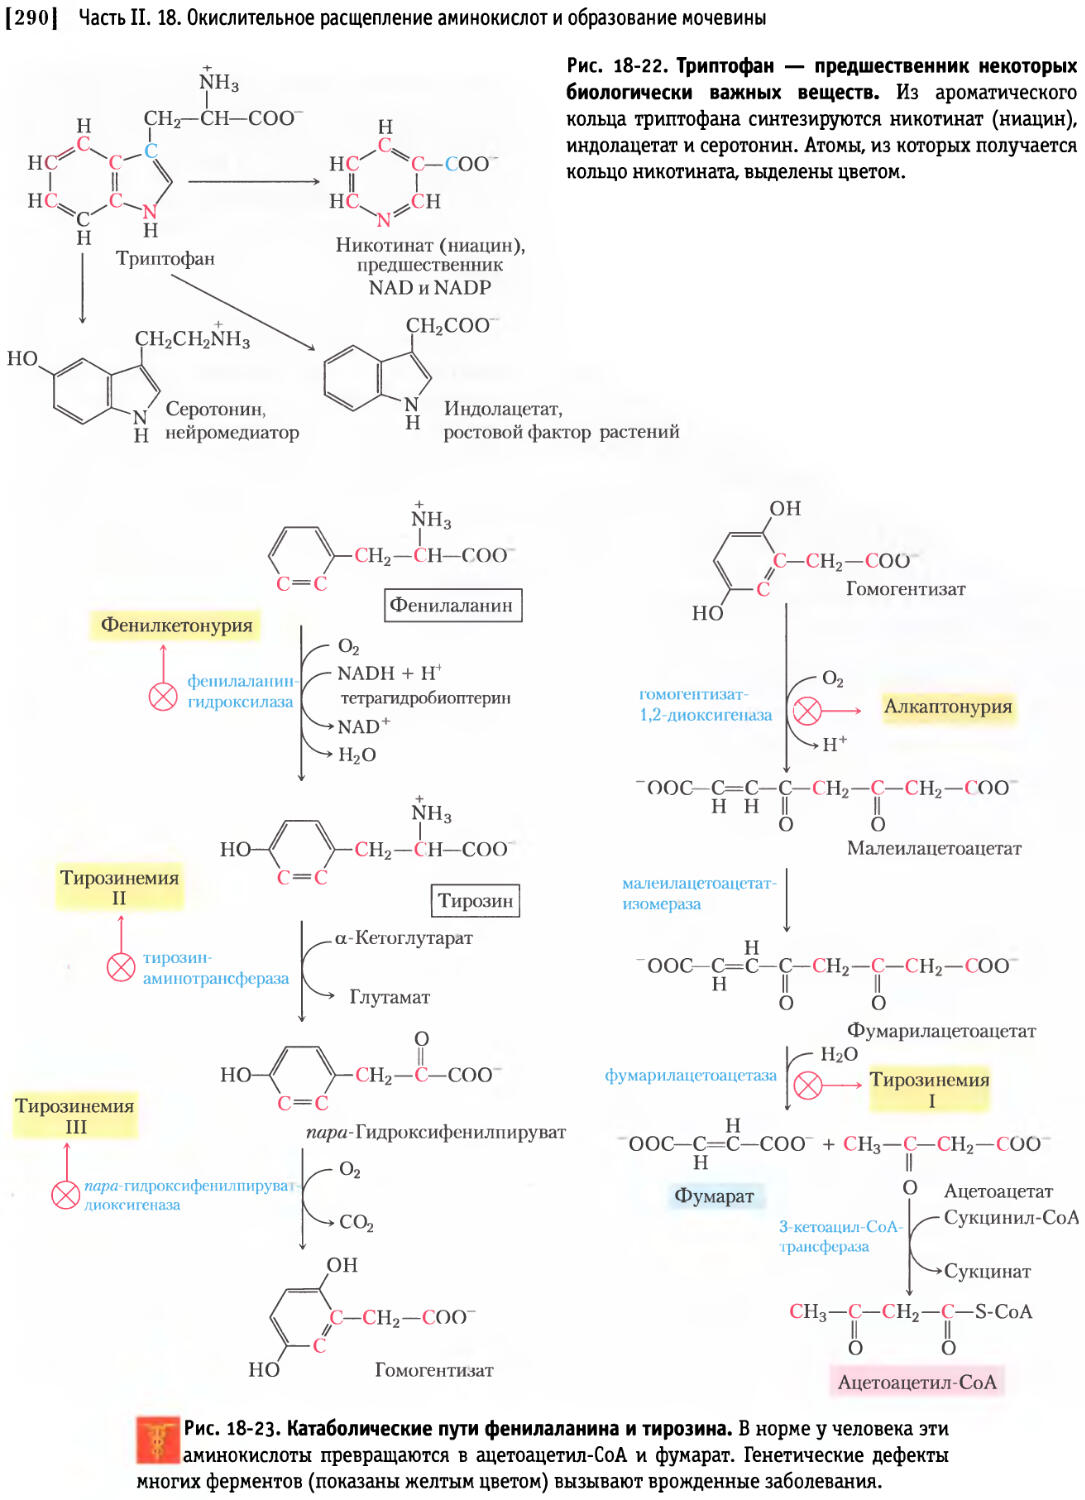 Общие пути метаболизма аминокислот